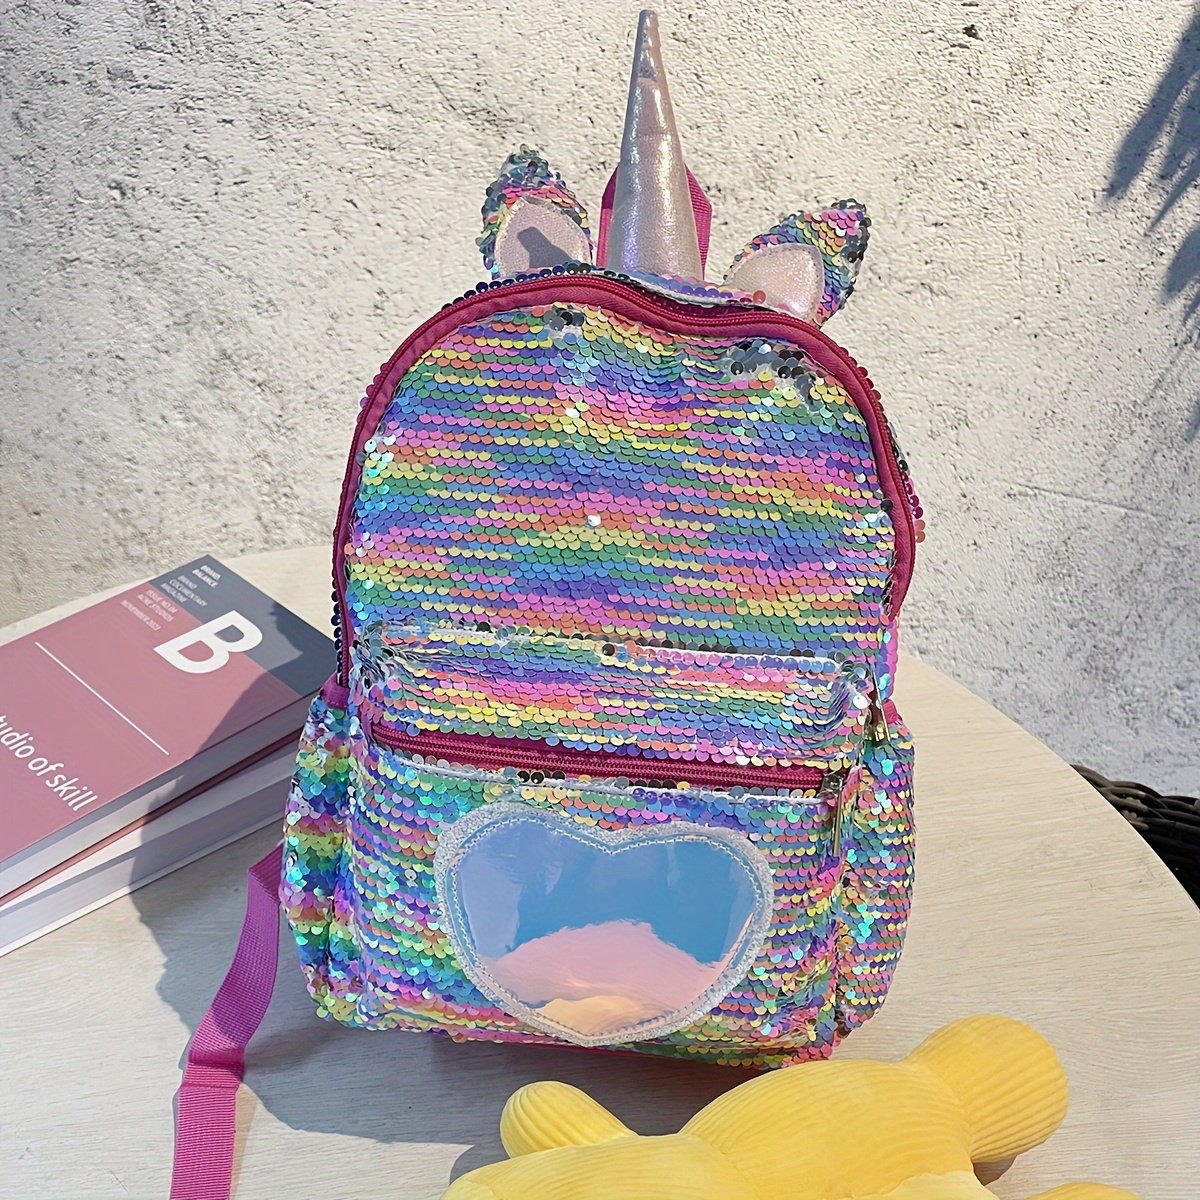 Kids Girls School Book Bag Plush Cartoon Unicorn Backpack Sequins Shoulder  Bag b